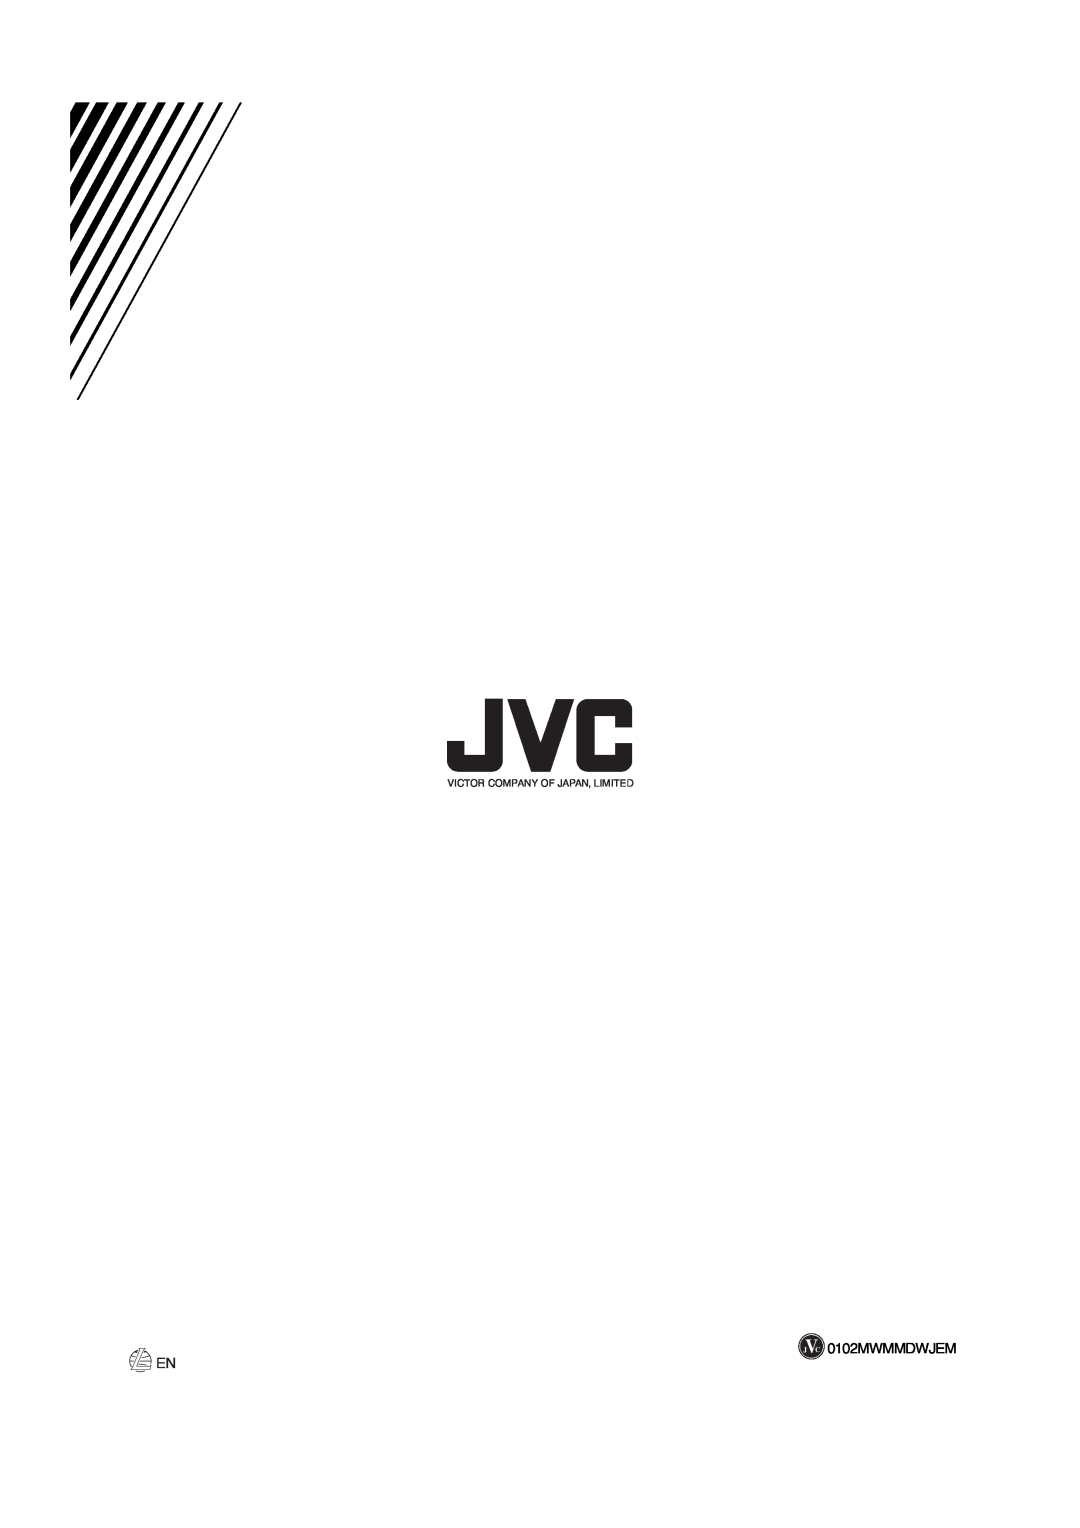 JVC FS-A52 manual JVC 0102MWMMDWJEM EN, Victor Company Of Japan, Limited 